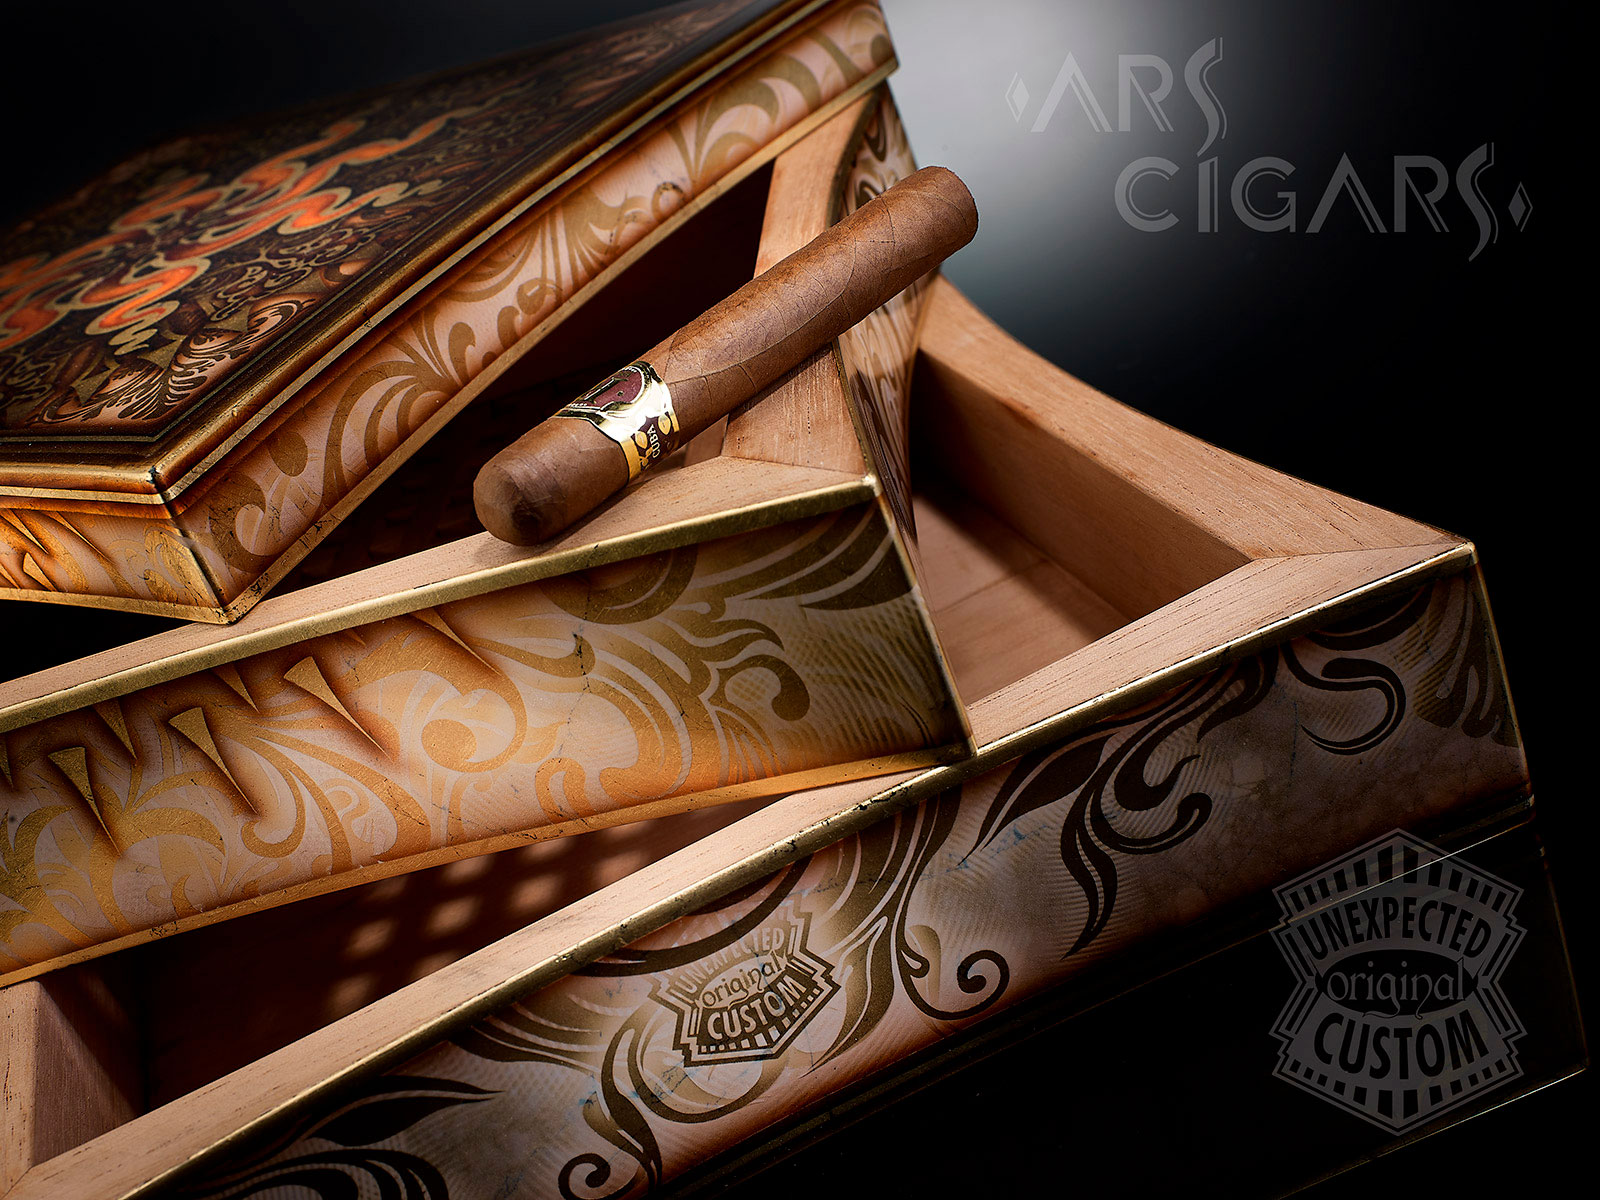 cigar humidor unexpected custom